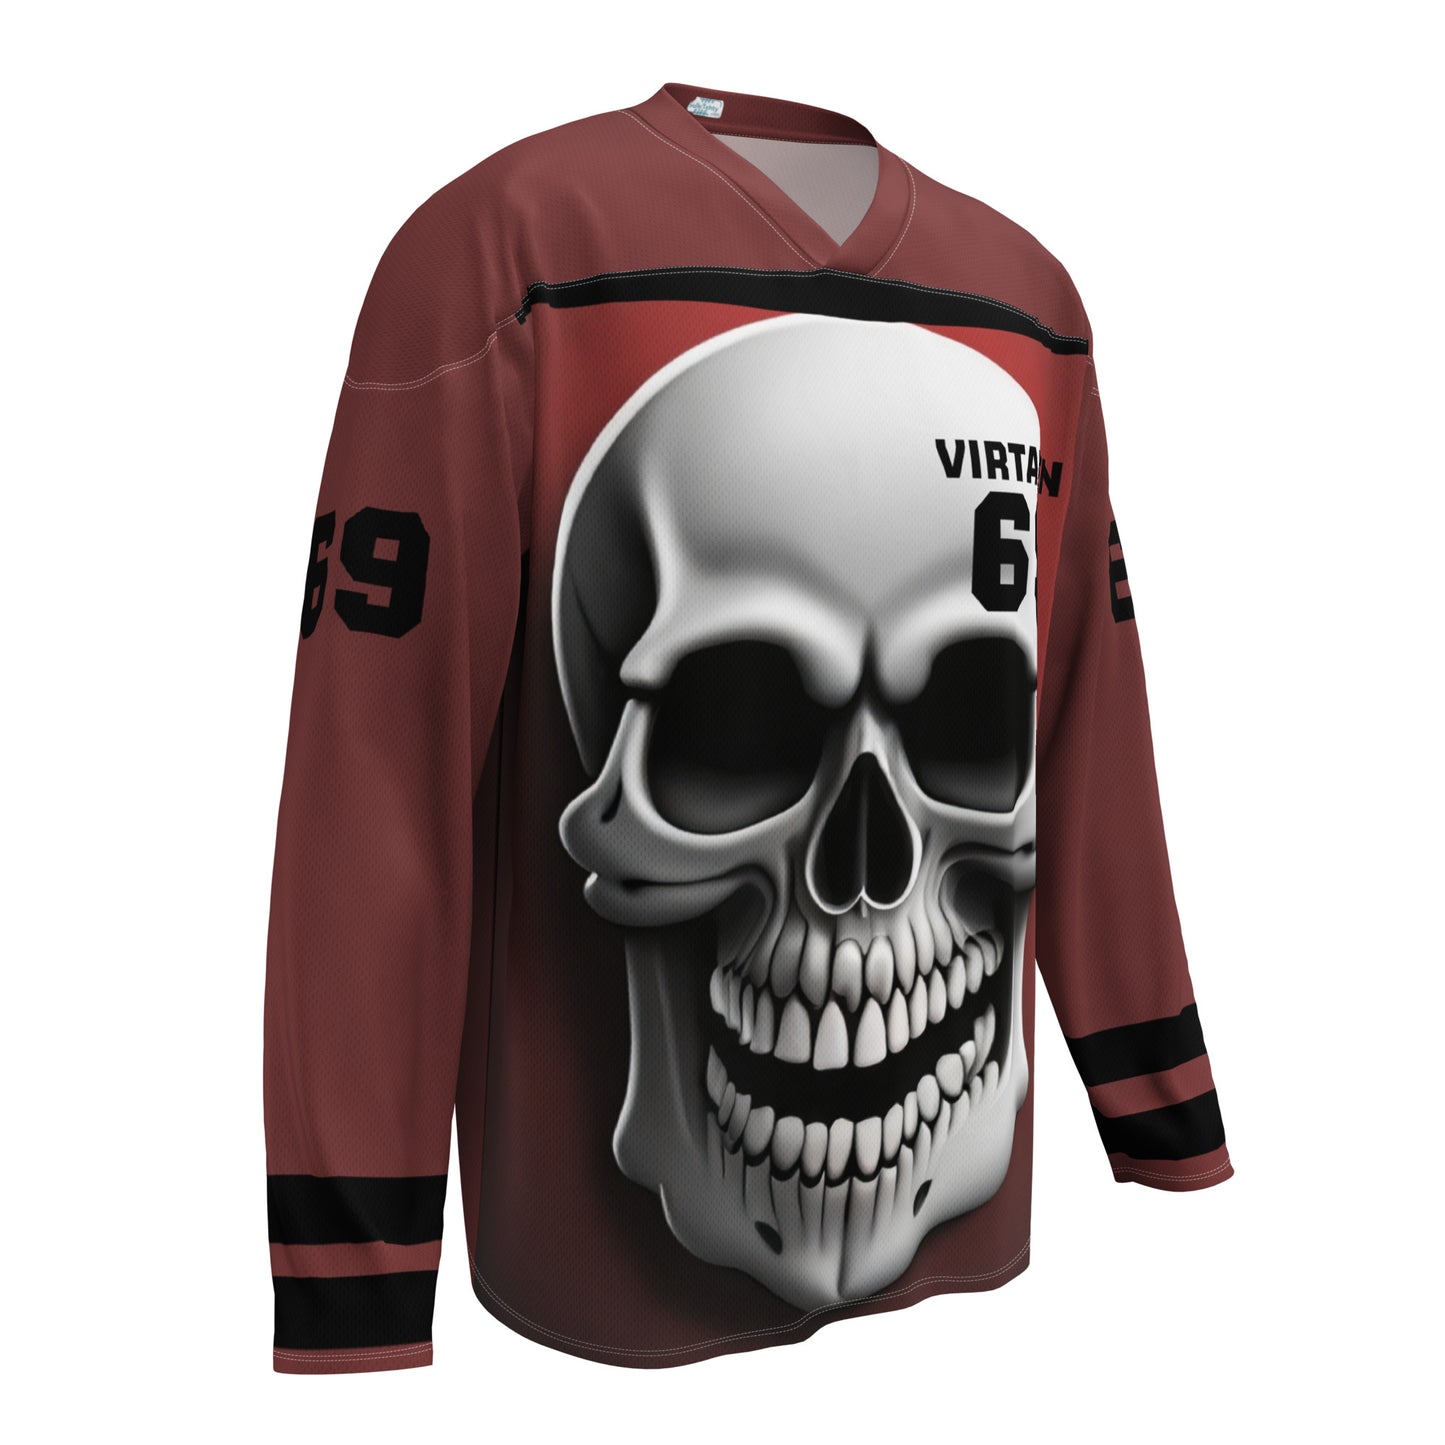 "Skull" hockey jersey (ecological)